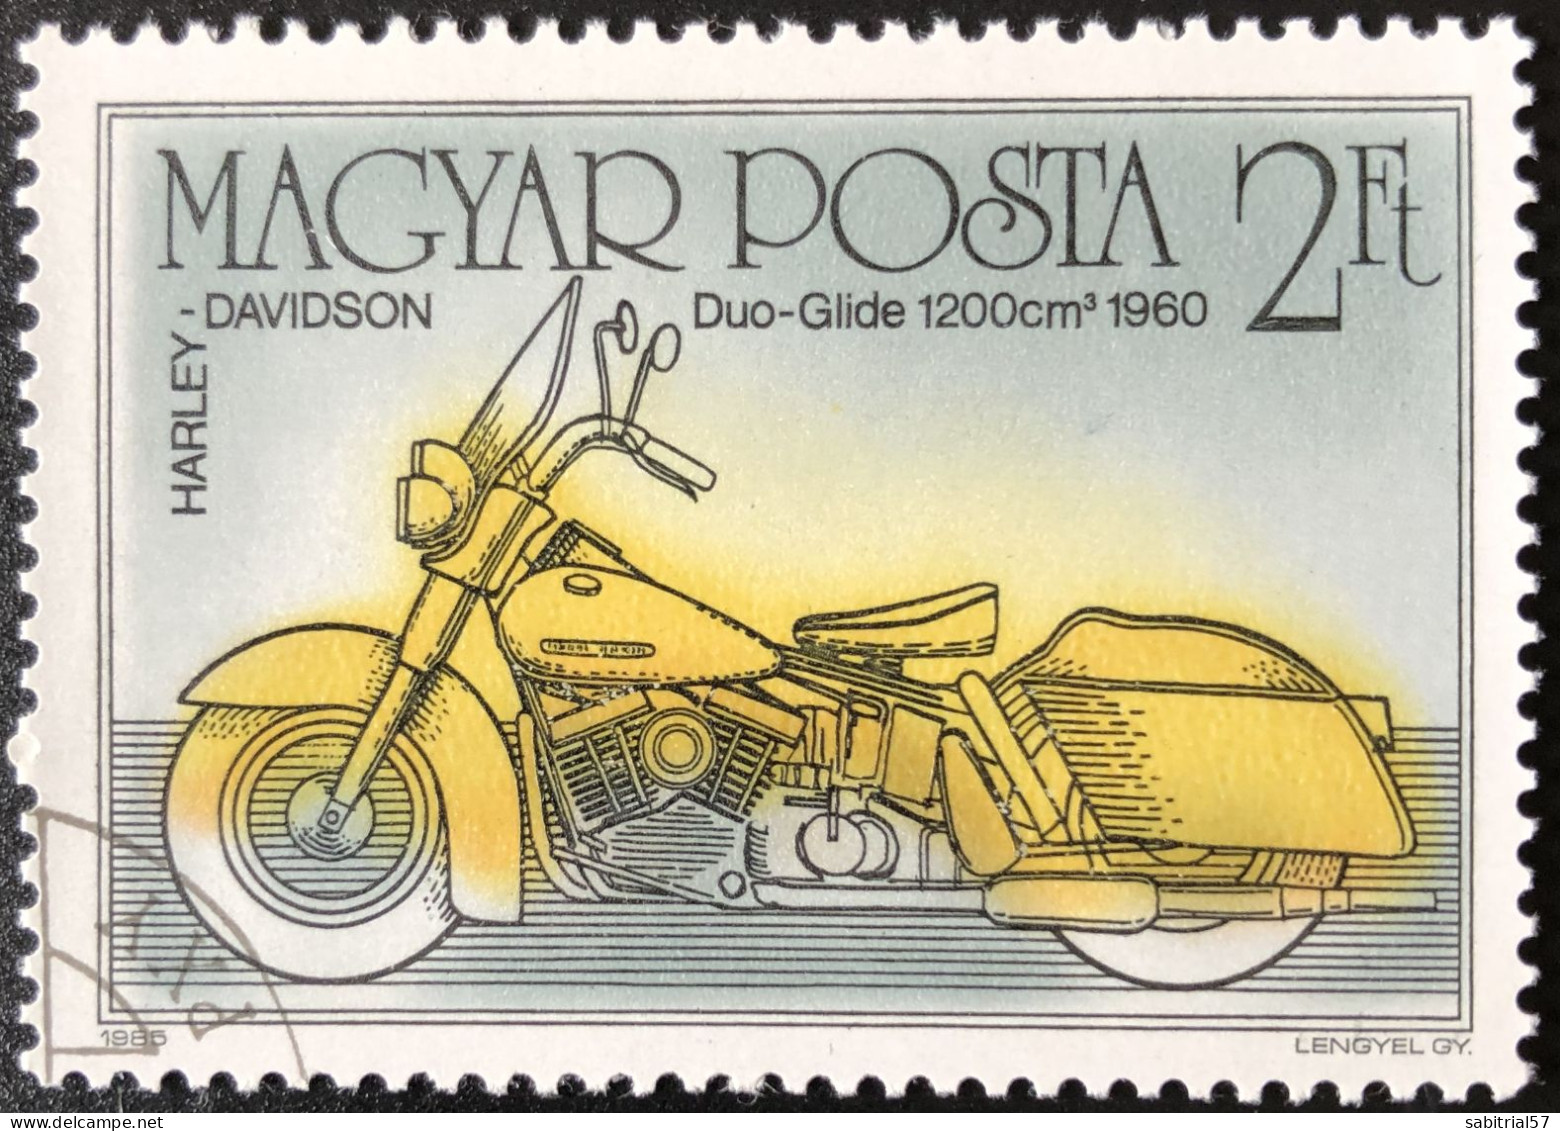 Hungria 1985 CTO / Harley Davidson / Hungary / Hongrie / Motorcycles / Motocyclettes / Motorräder - Motorbikes